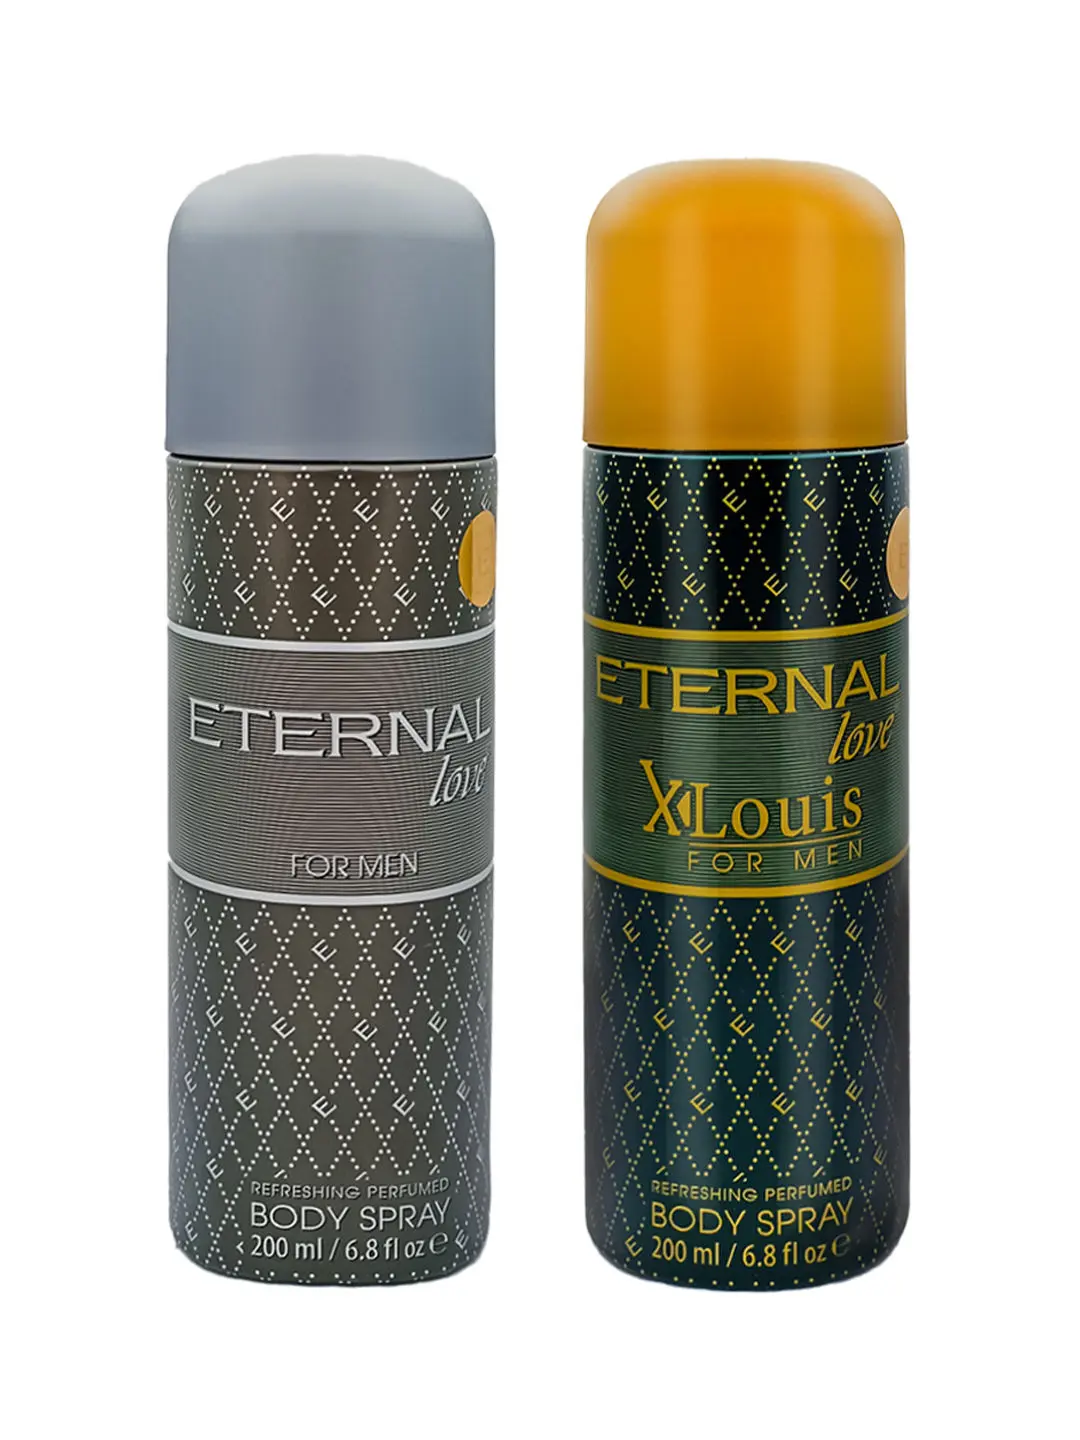 ETERNAL Love for Men Deodorant Perfumed Bodyspray, 200ml & X-Louis for Men Deodorant Perfumed Bodyspray, 200ml